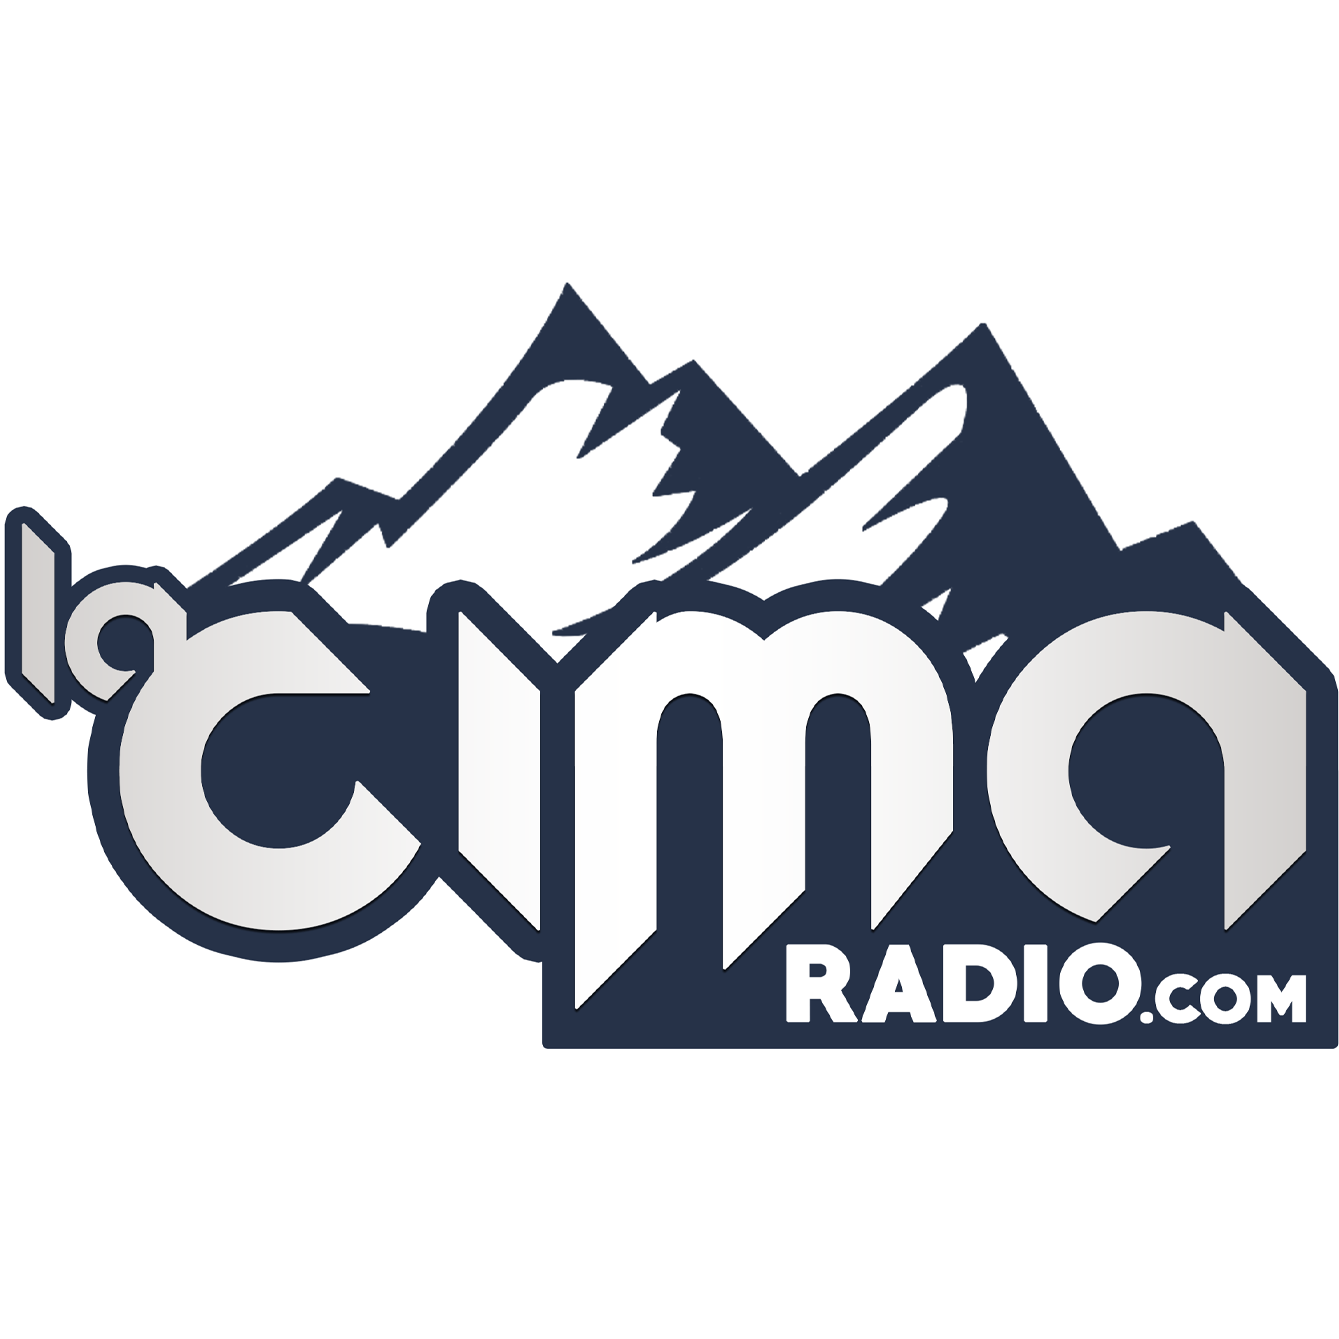 La Cima Radio